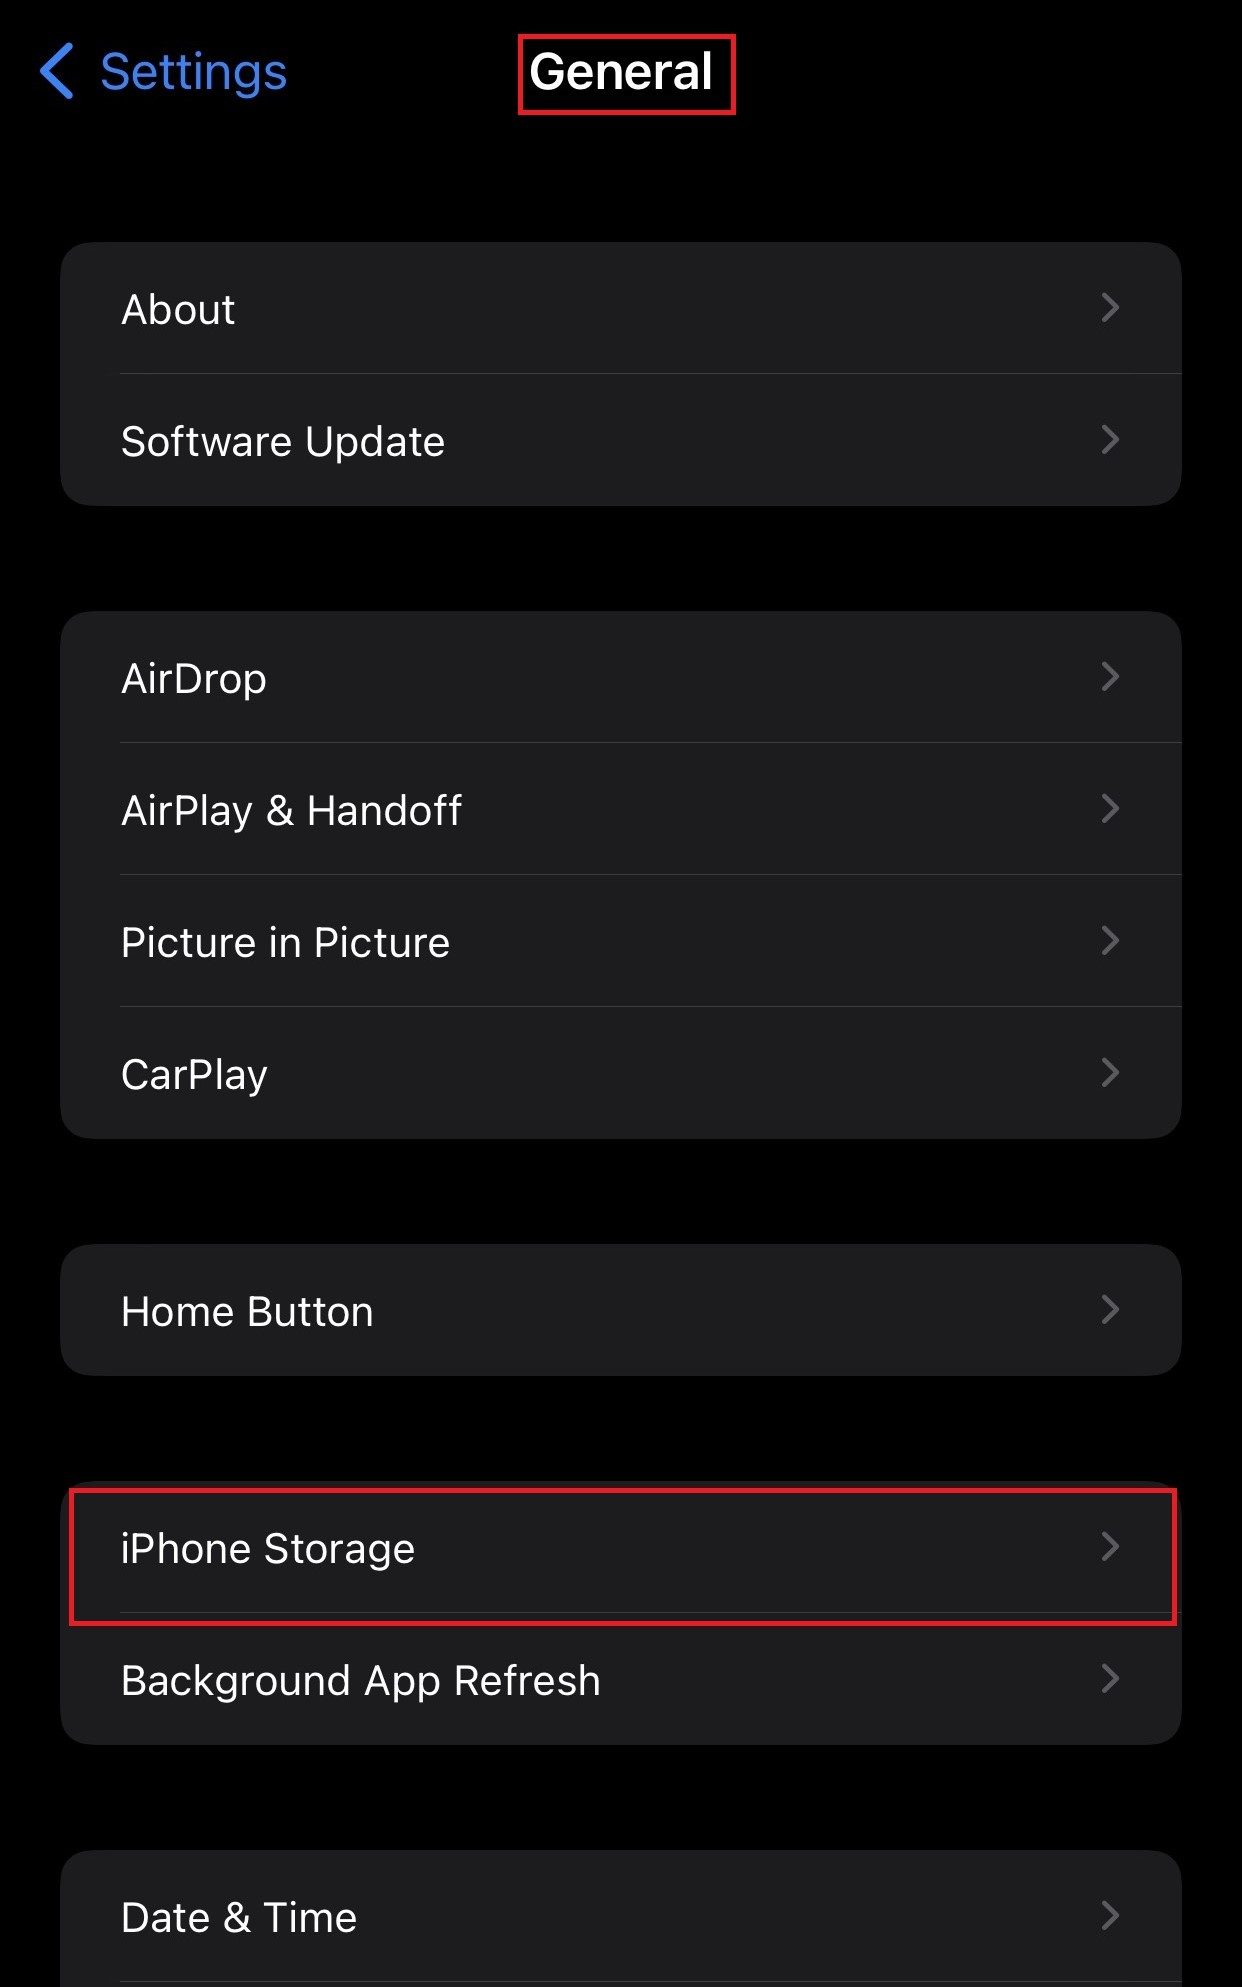 Open iPhone Storage under General Settings